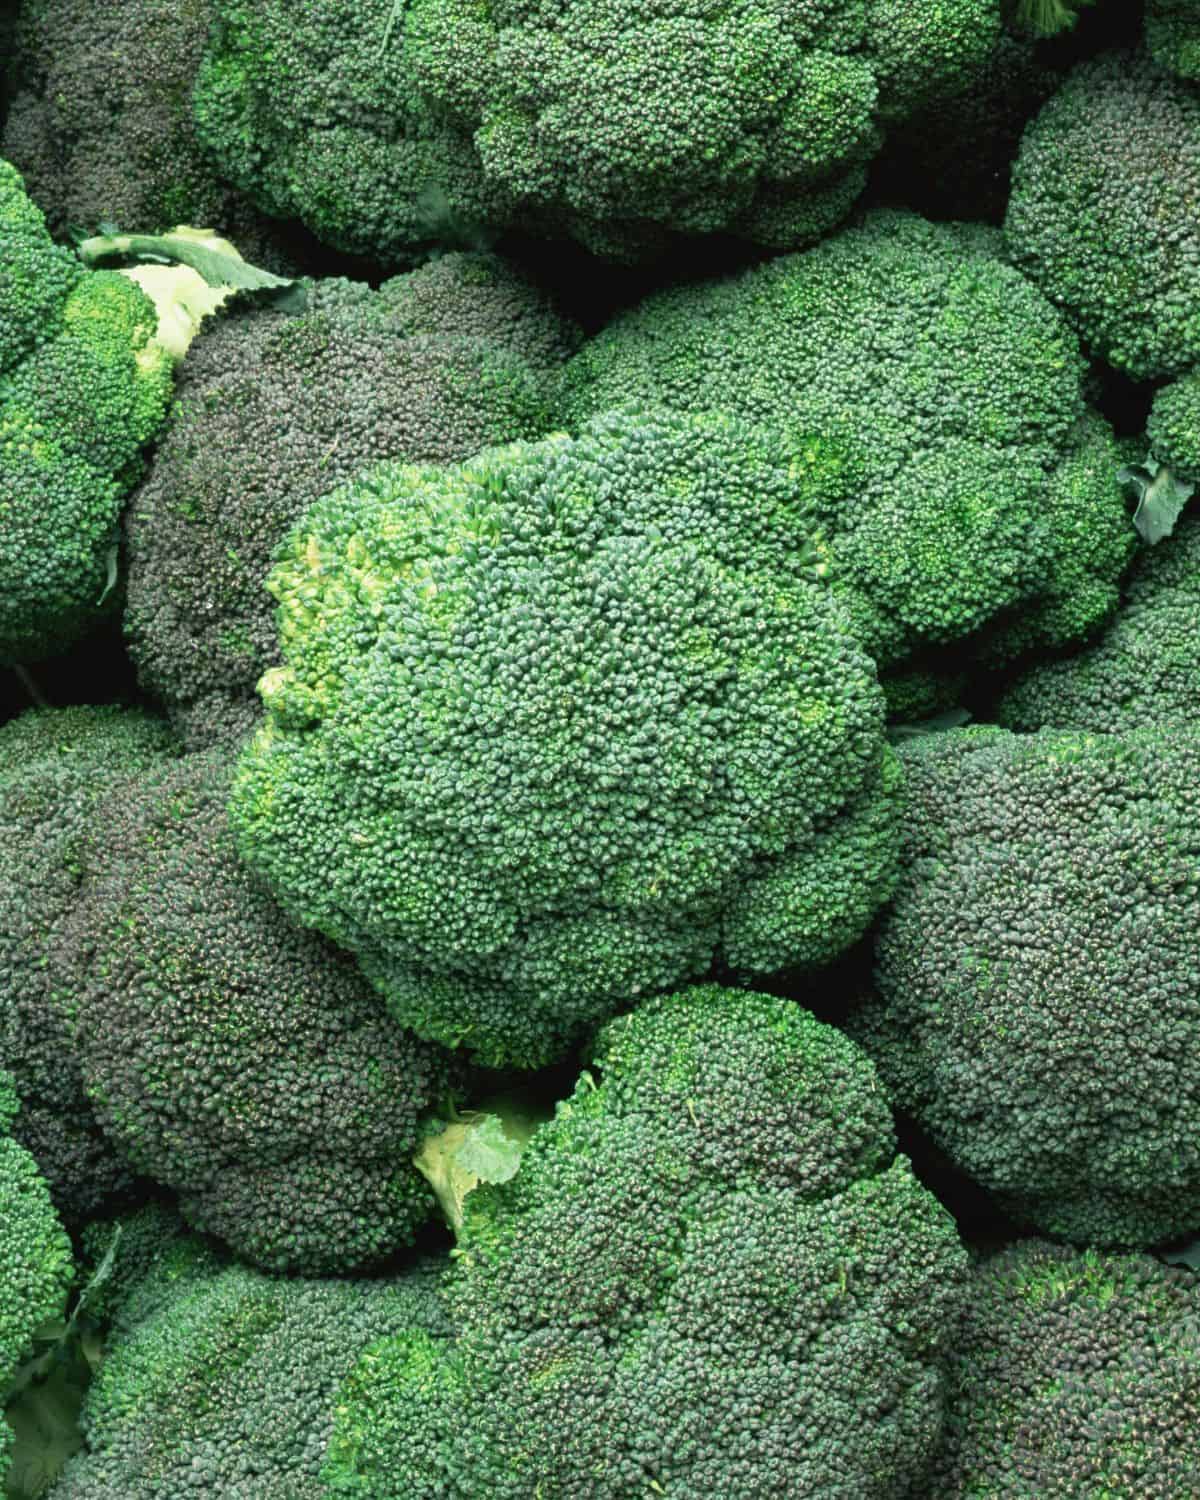 Heads of fresh broccoli.